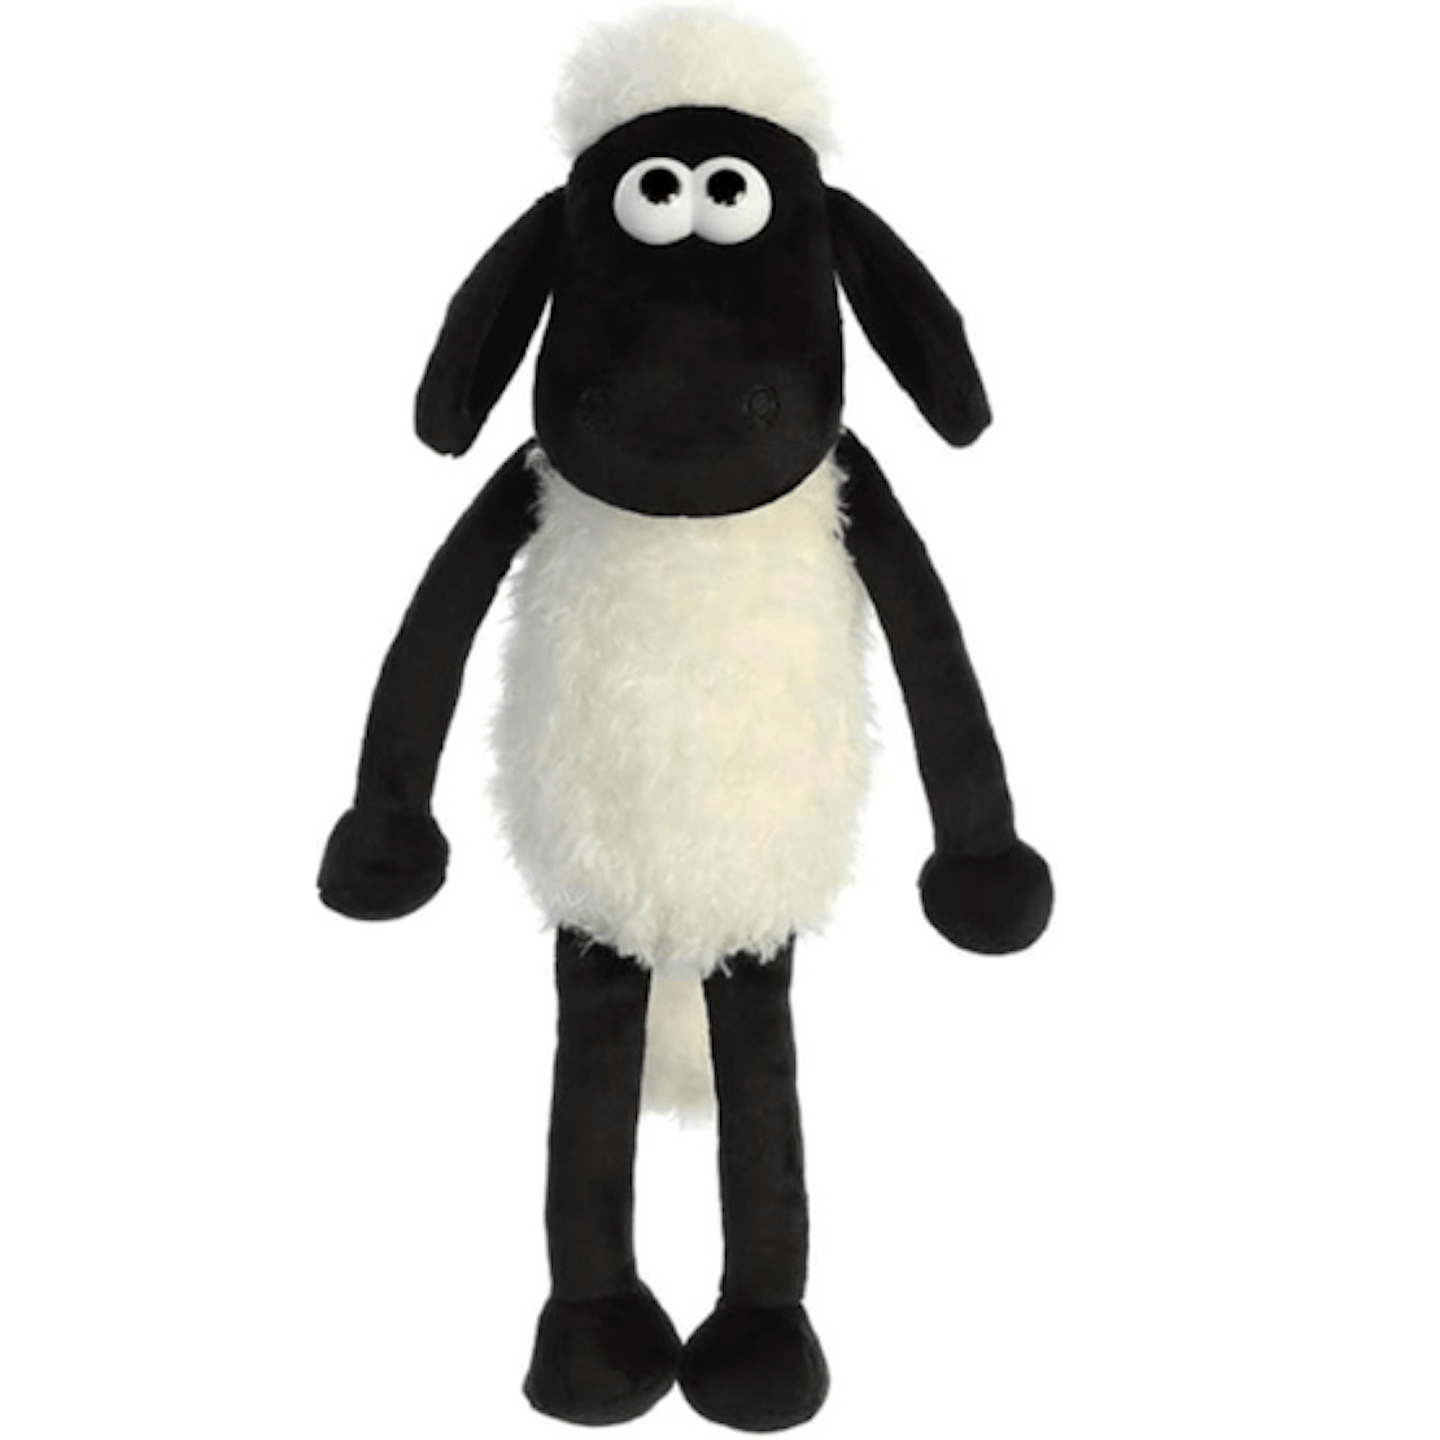 Shaun the Sheep toy